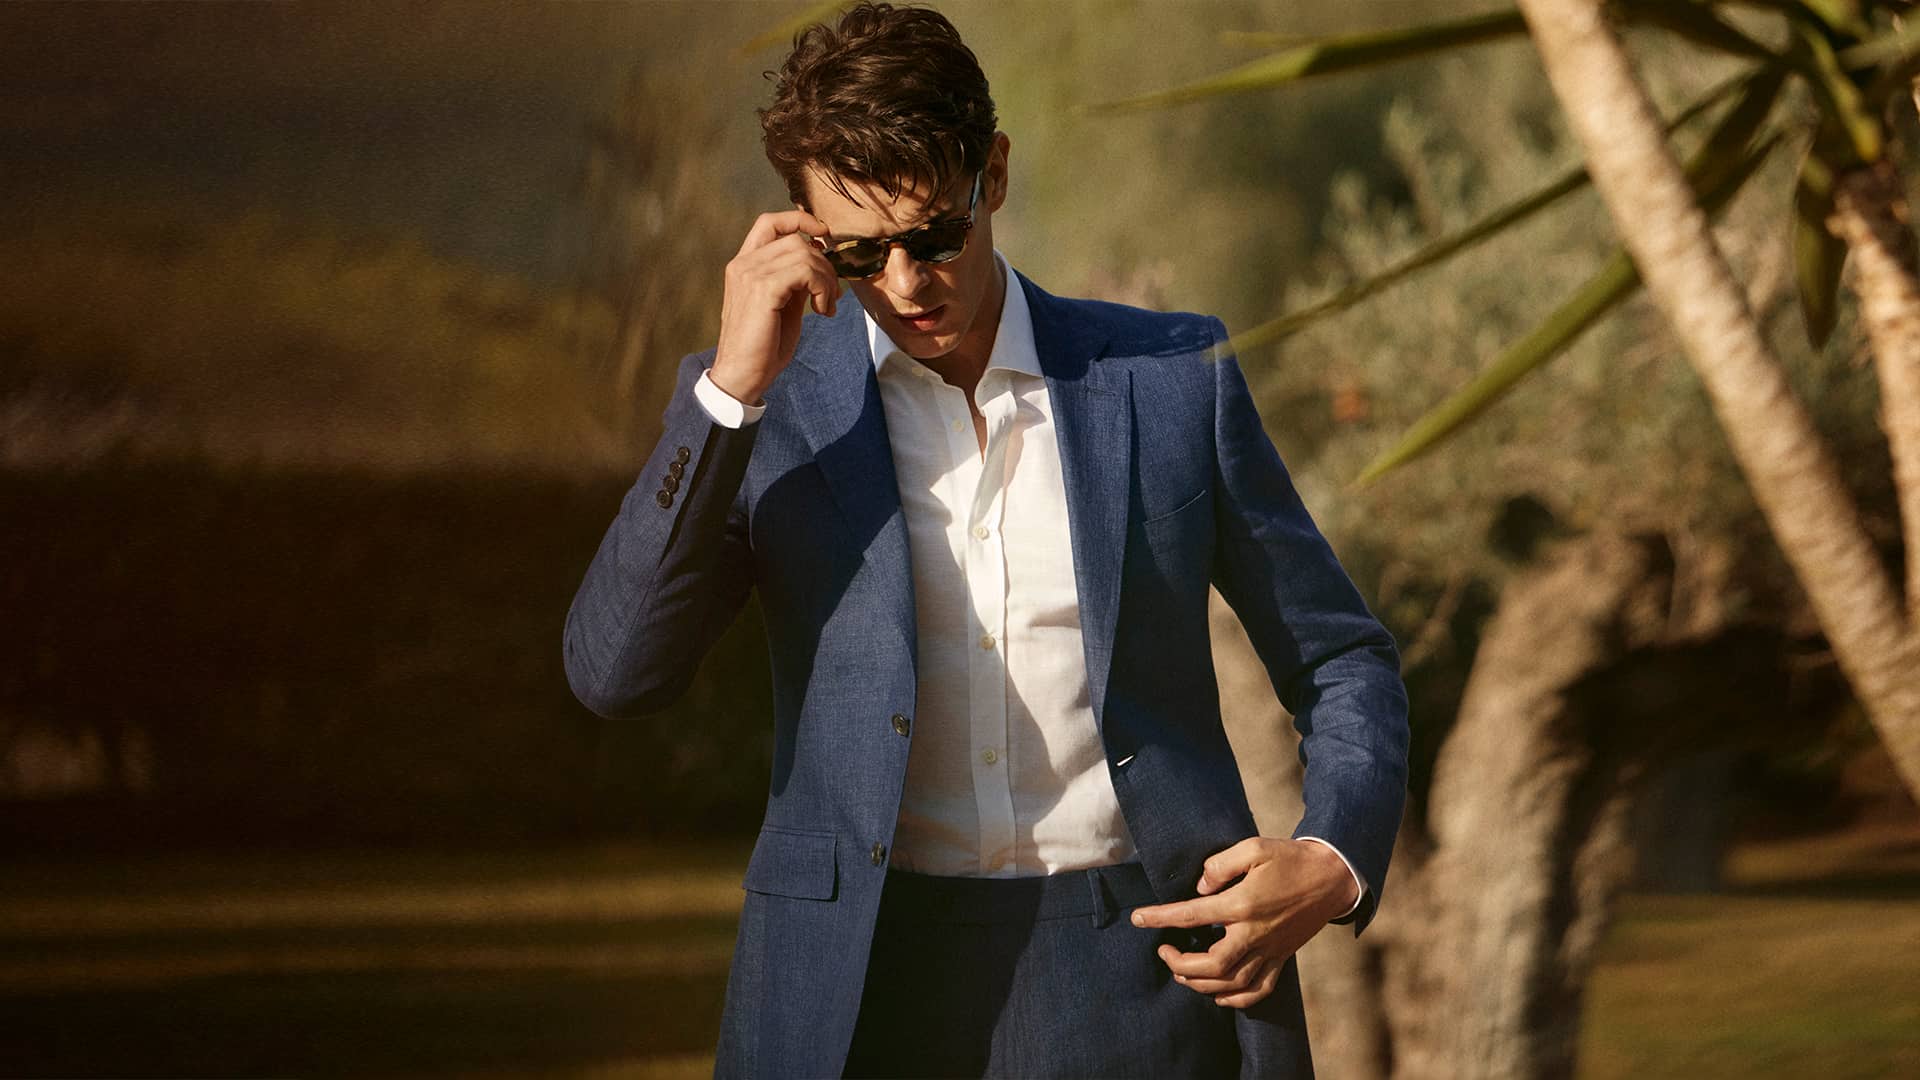 Men's semi formal summer attire: light blue textured suit with white shirt